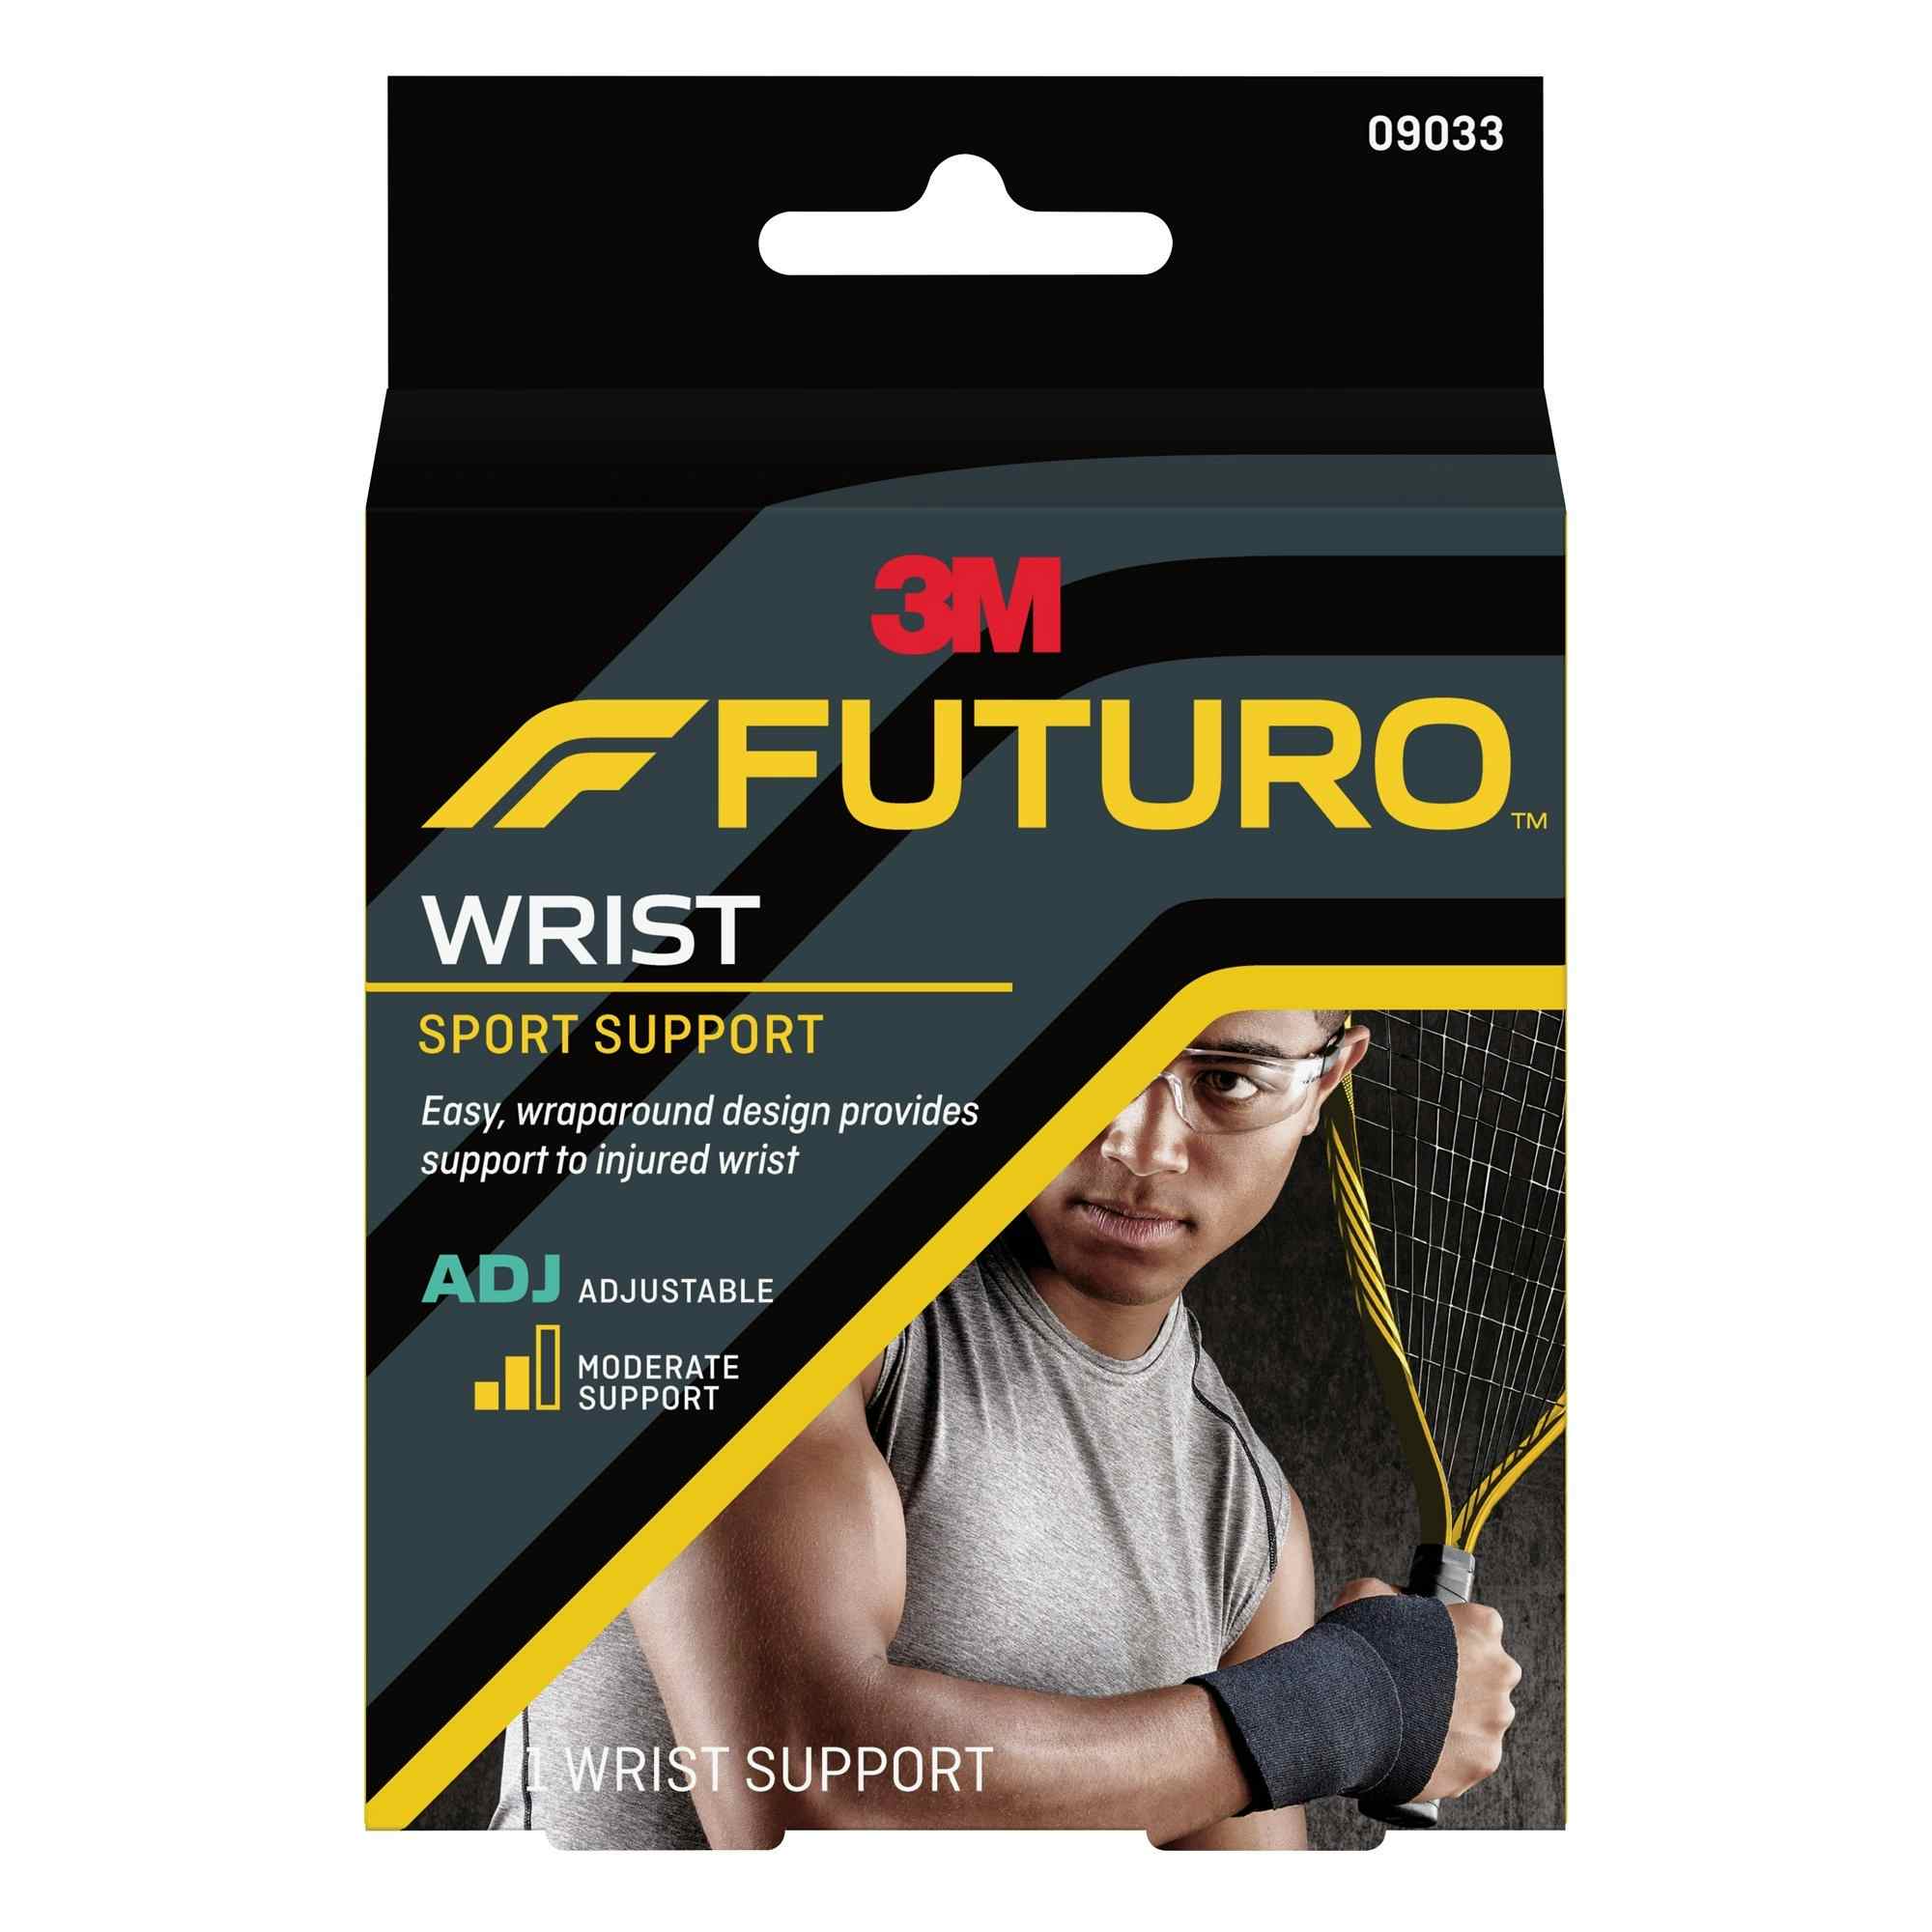 3M Futuro Wrist Sport Support, Moderate Support, 09033ENR, 1 Each